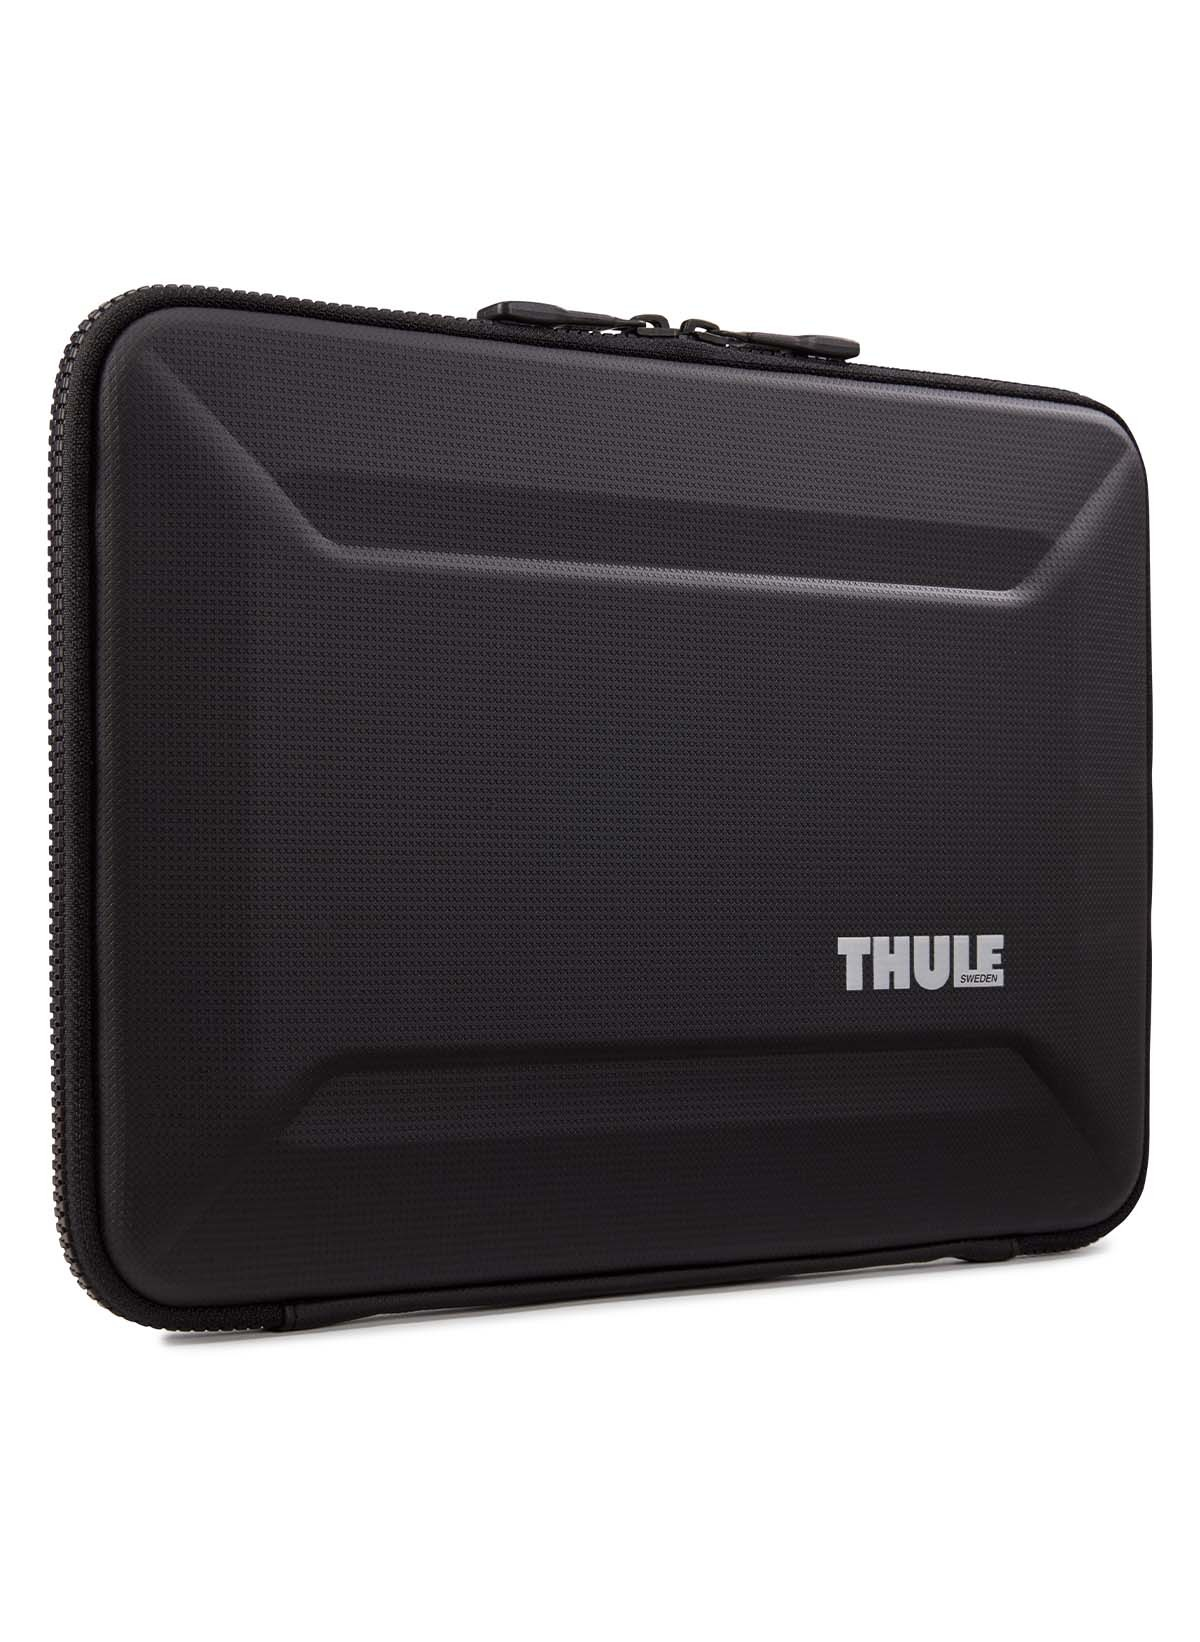 Notebooksleeves Gauntlet Polyurethan, Black Universal- MacBook THULE Sleeve 4 für Sleeve Schwarz 14\